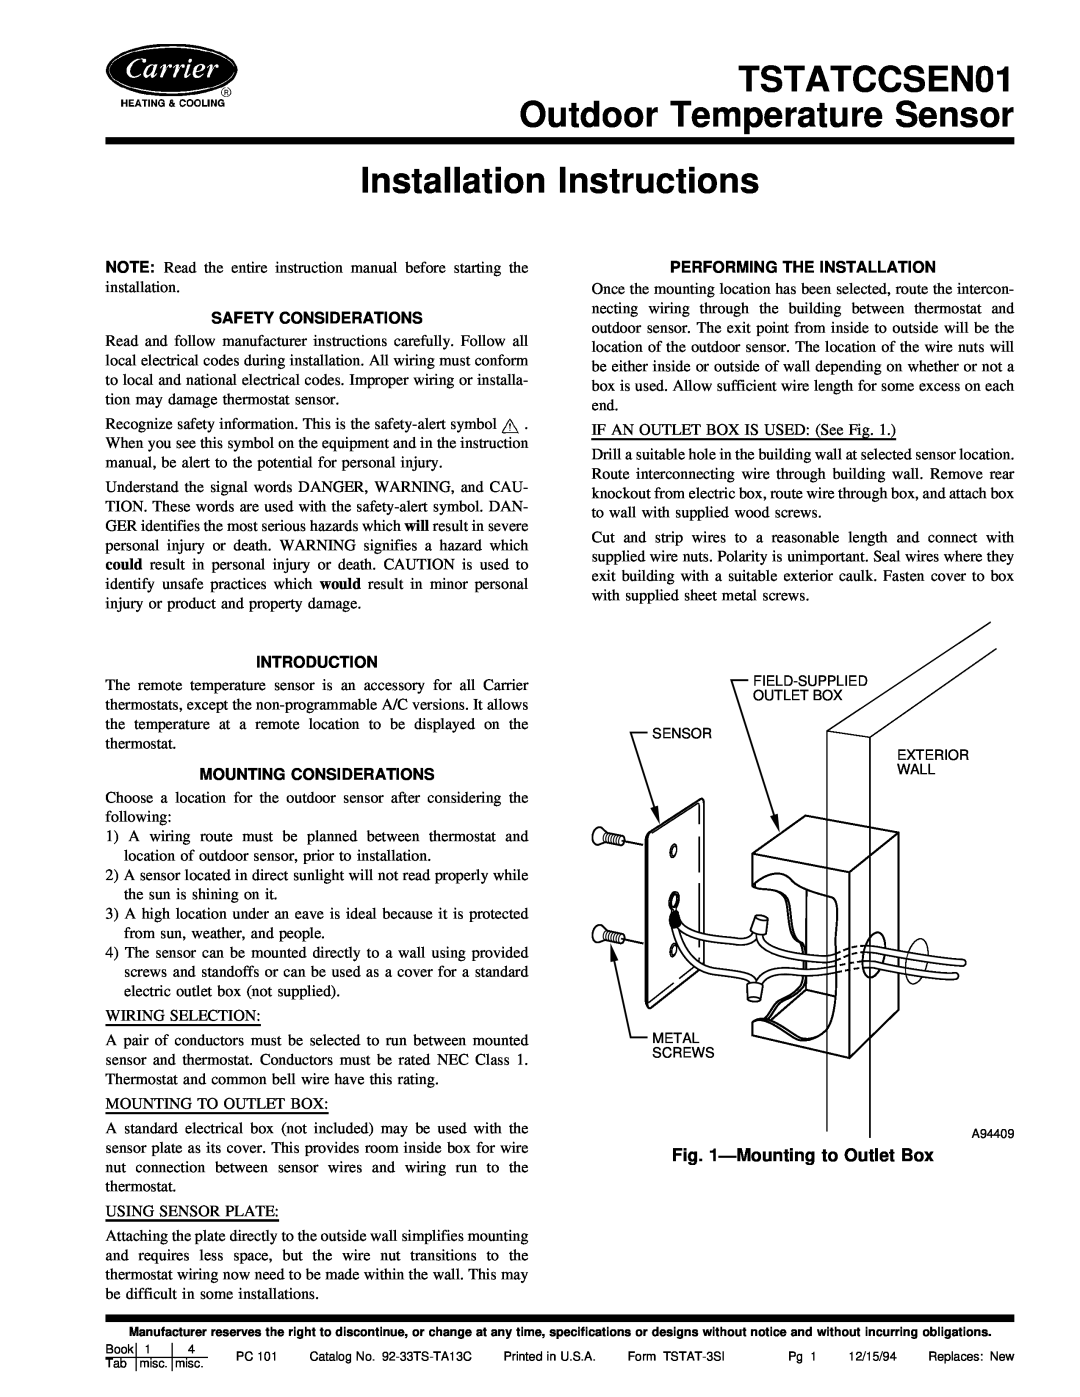 Carrier TSTATCCSEN01 installation instructions ÐMounting to Outlet Box, Installation Instructions, Safety Considerations 